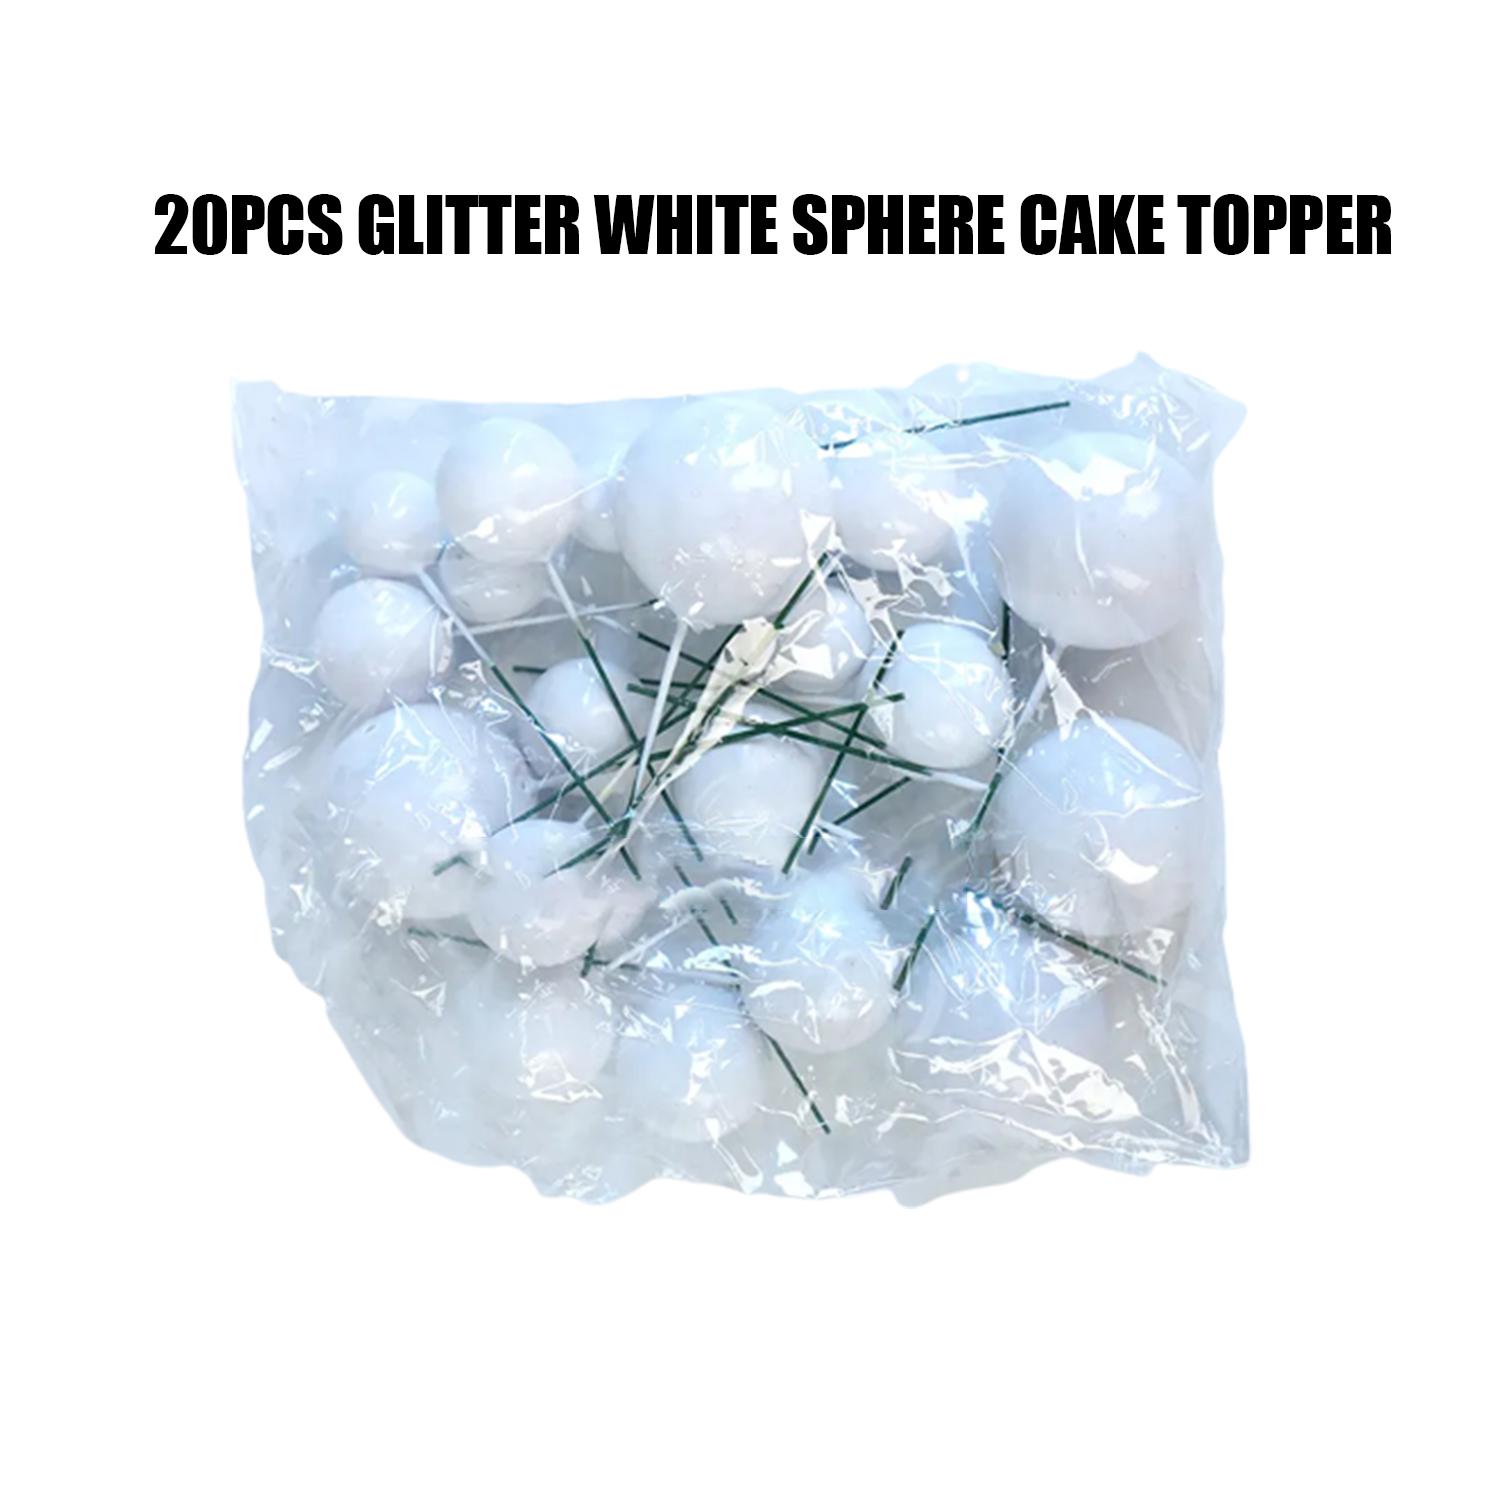 20PCS GLITTER WHITE SPHERE CAKE TOPPER